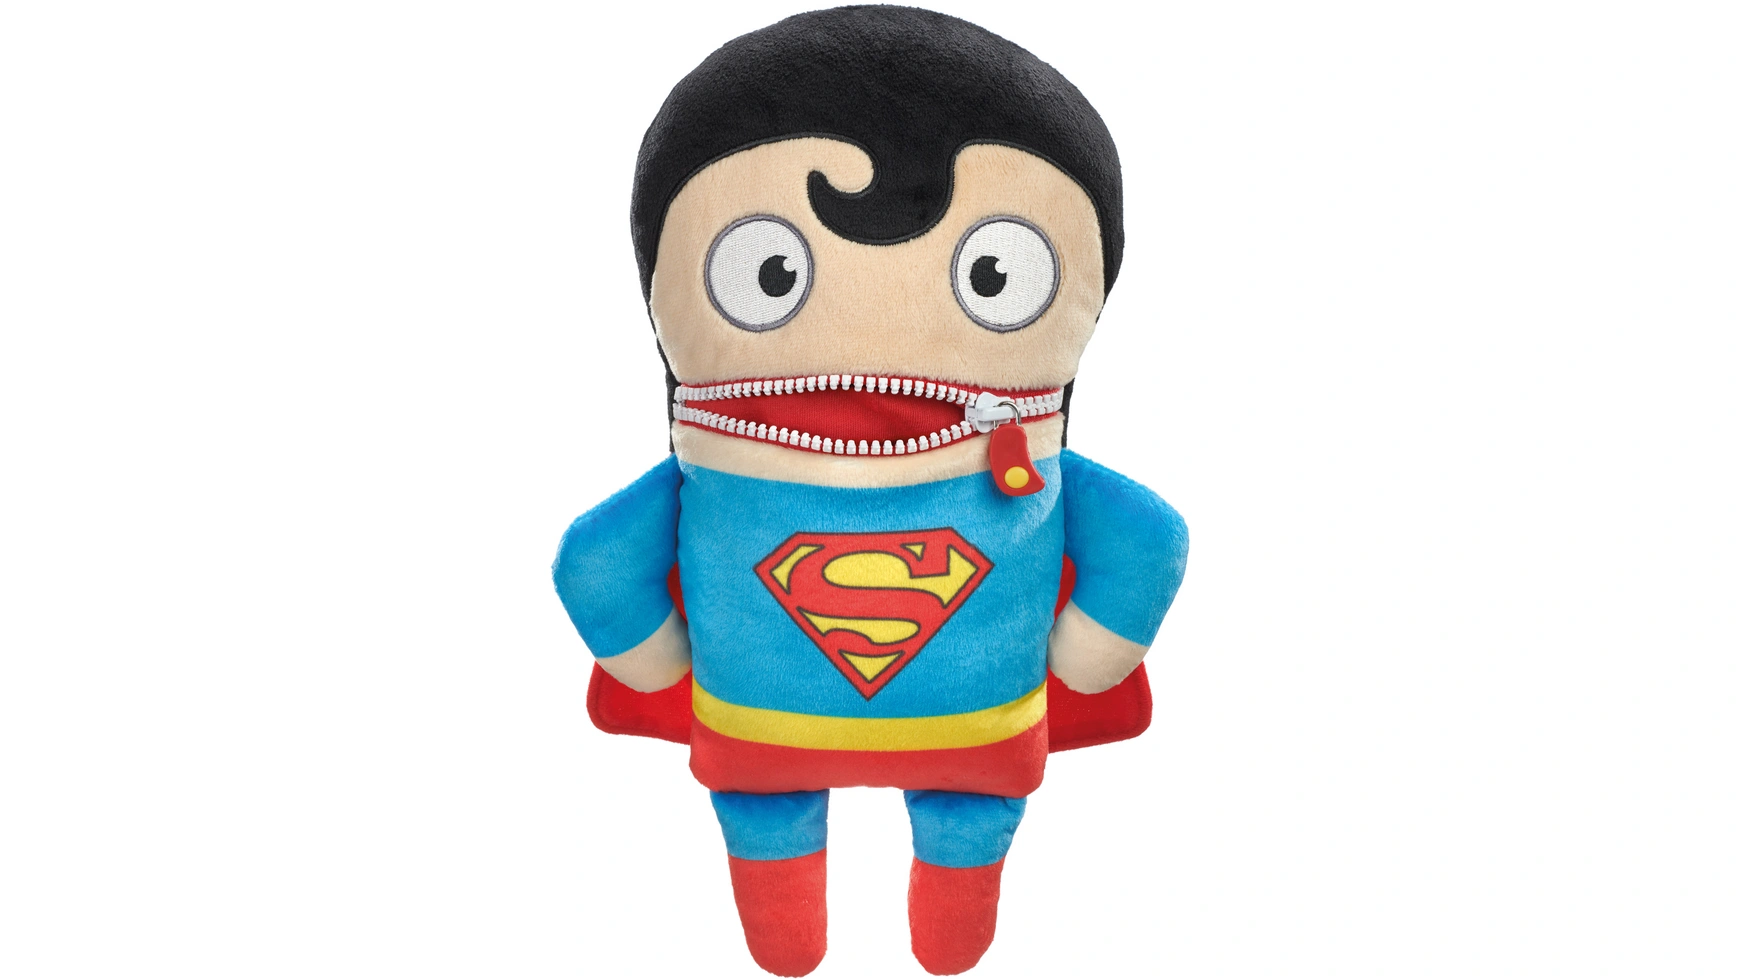 Schmidt Spiele Worry Eater DC Super Hero: Worry Eater, Супермен, 29 см god eater 3 [ps4]